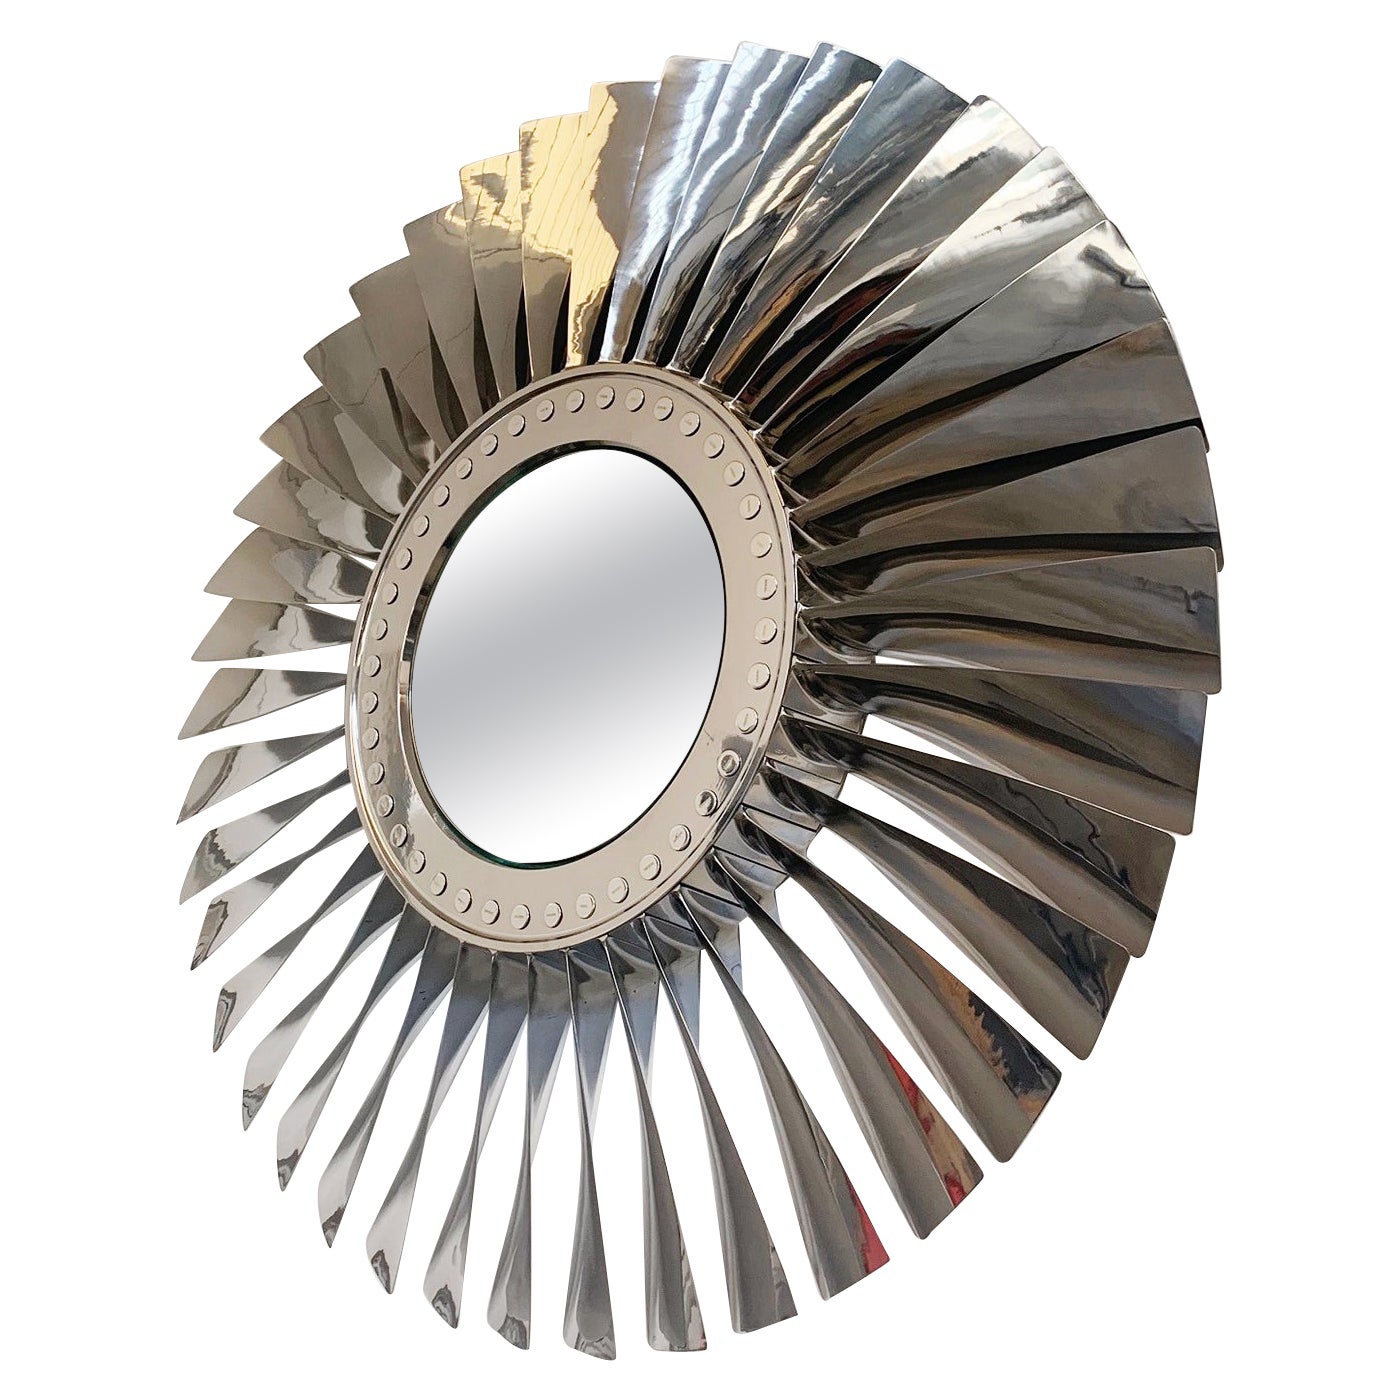 Miroir de tourbine de Boeing